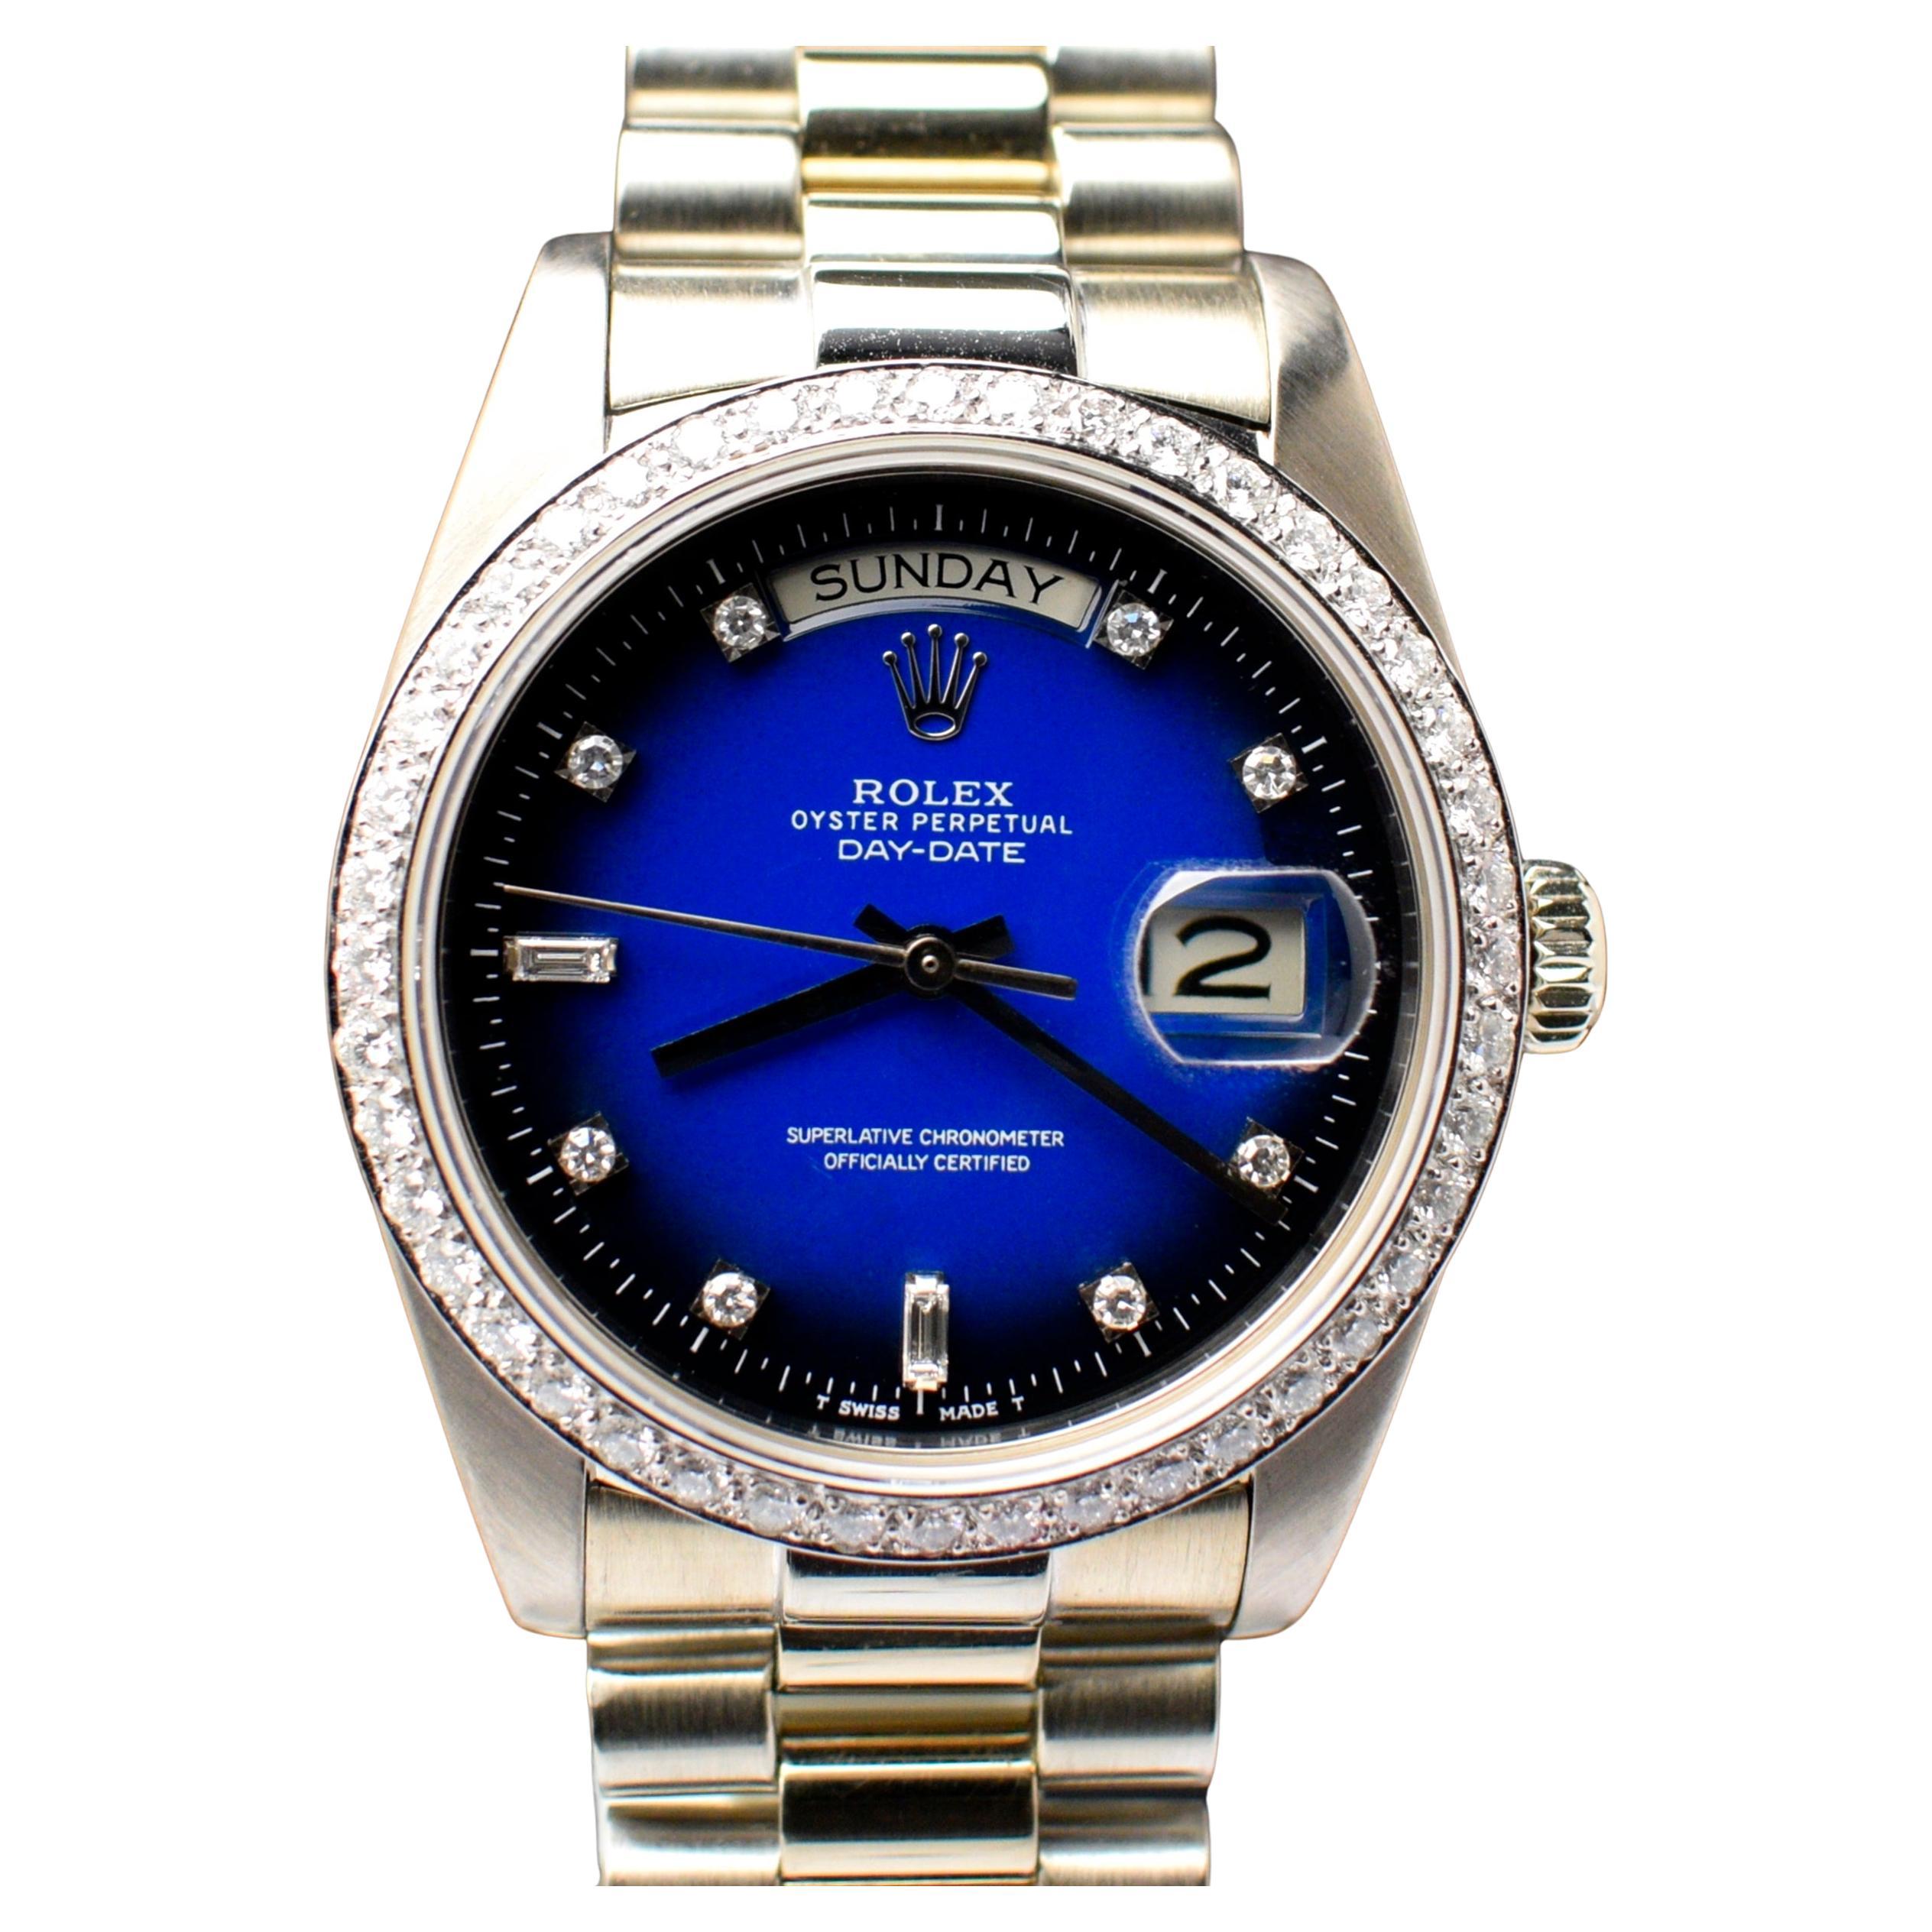 Does Rolex make quartz watches?